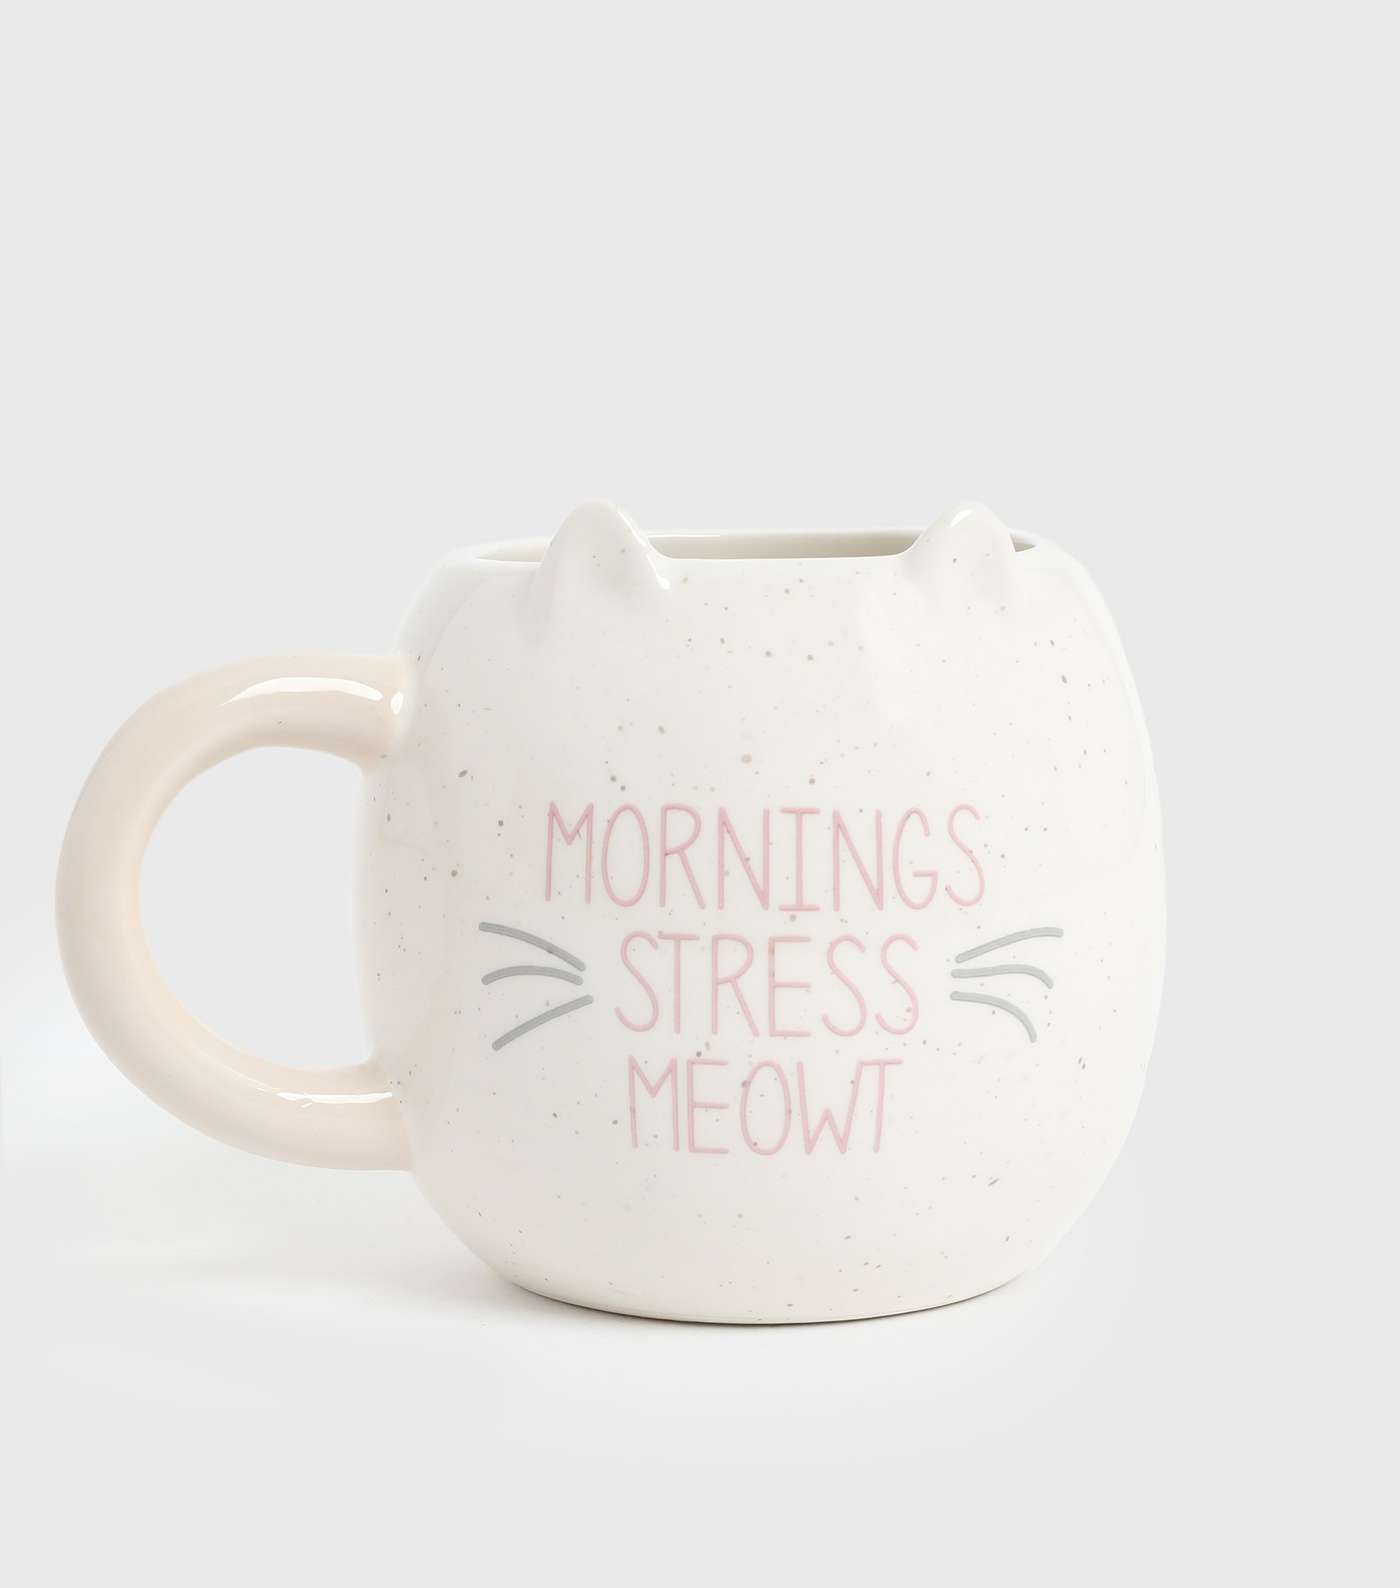 Off White Mornings Stress Meowt Cat Mug